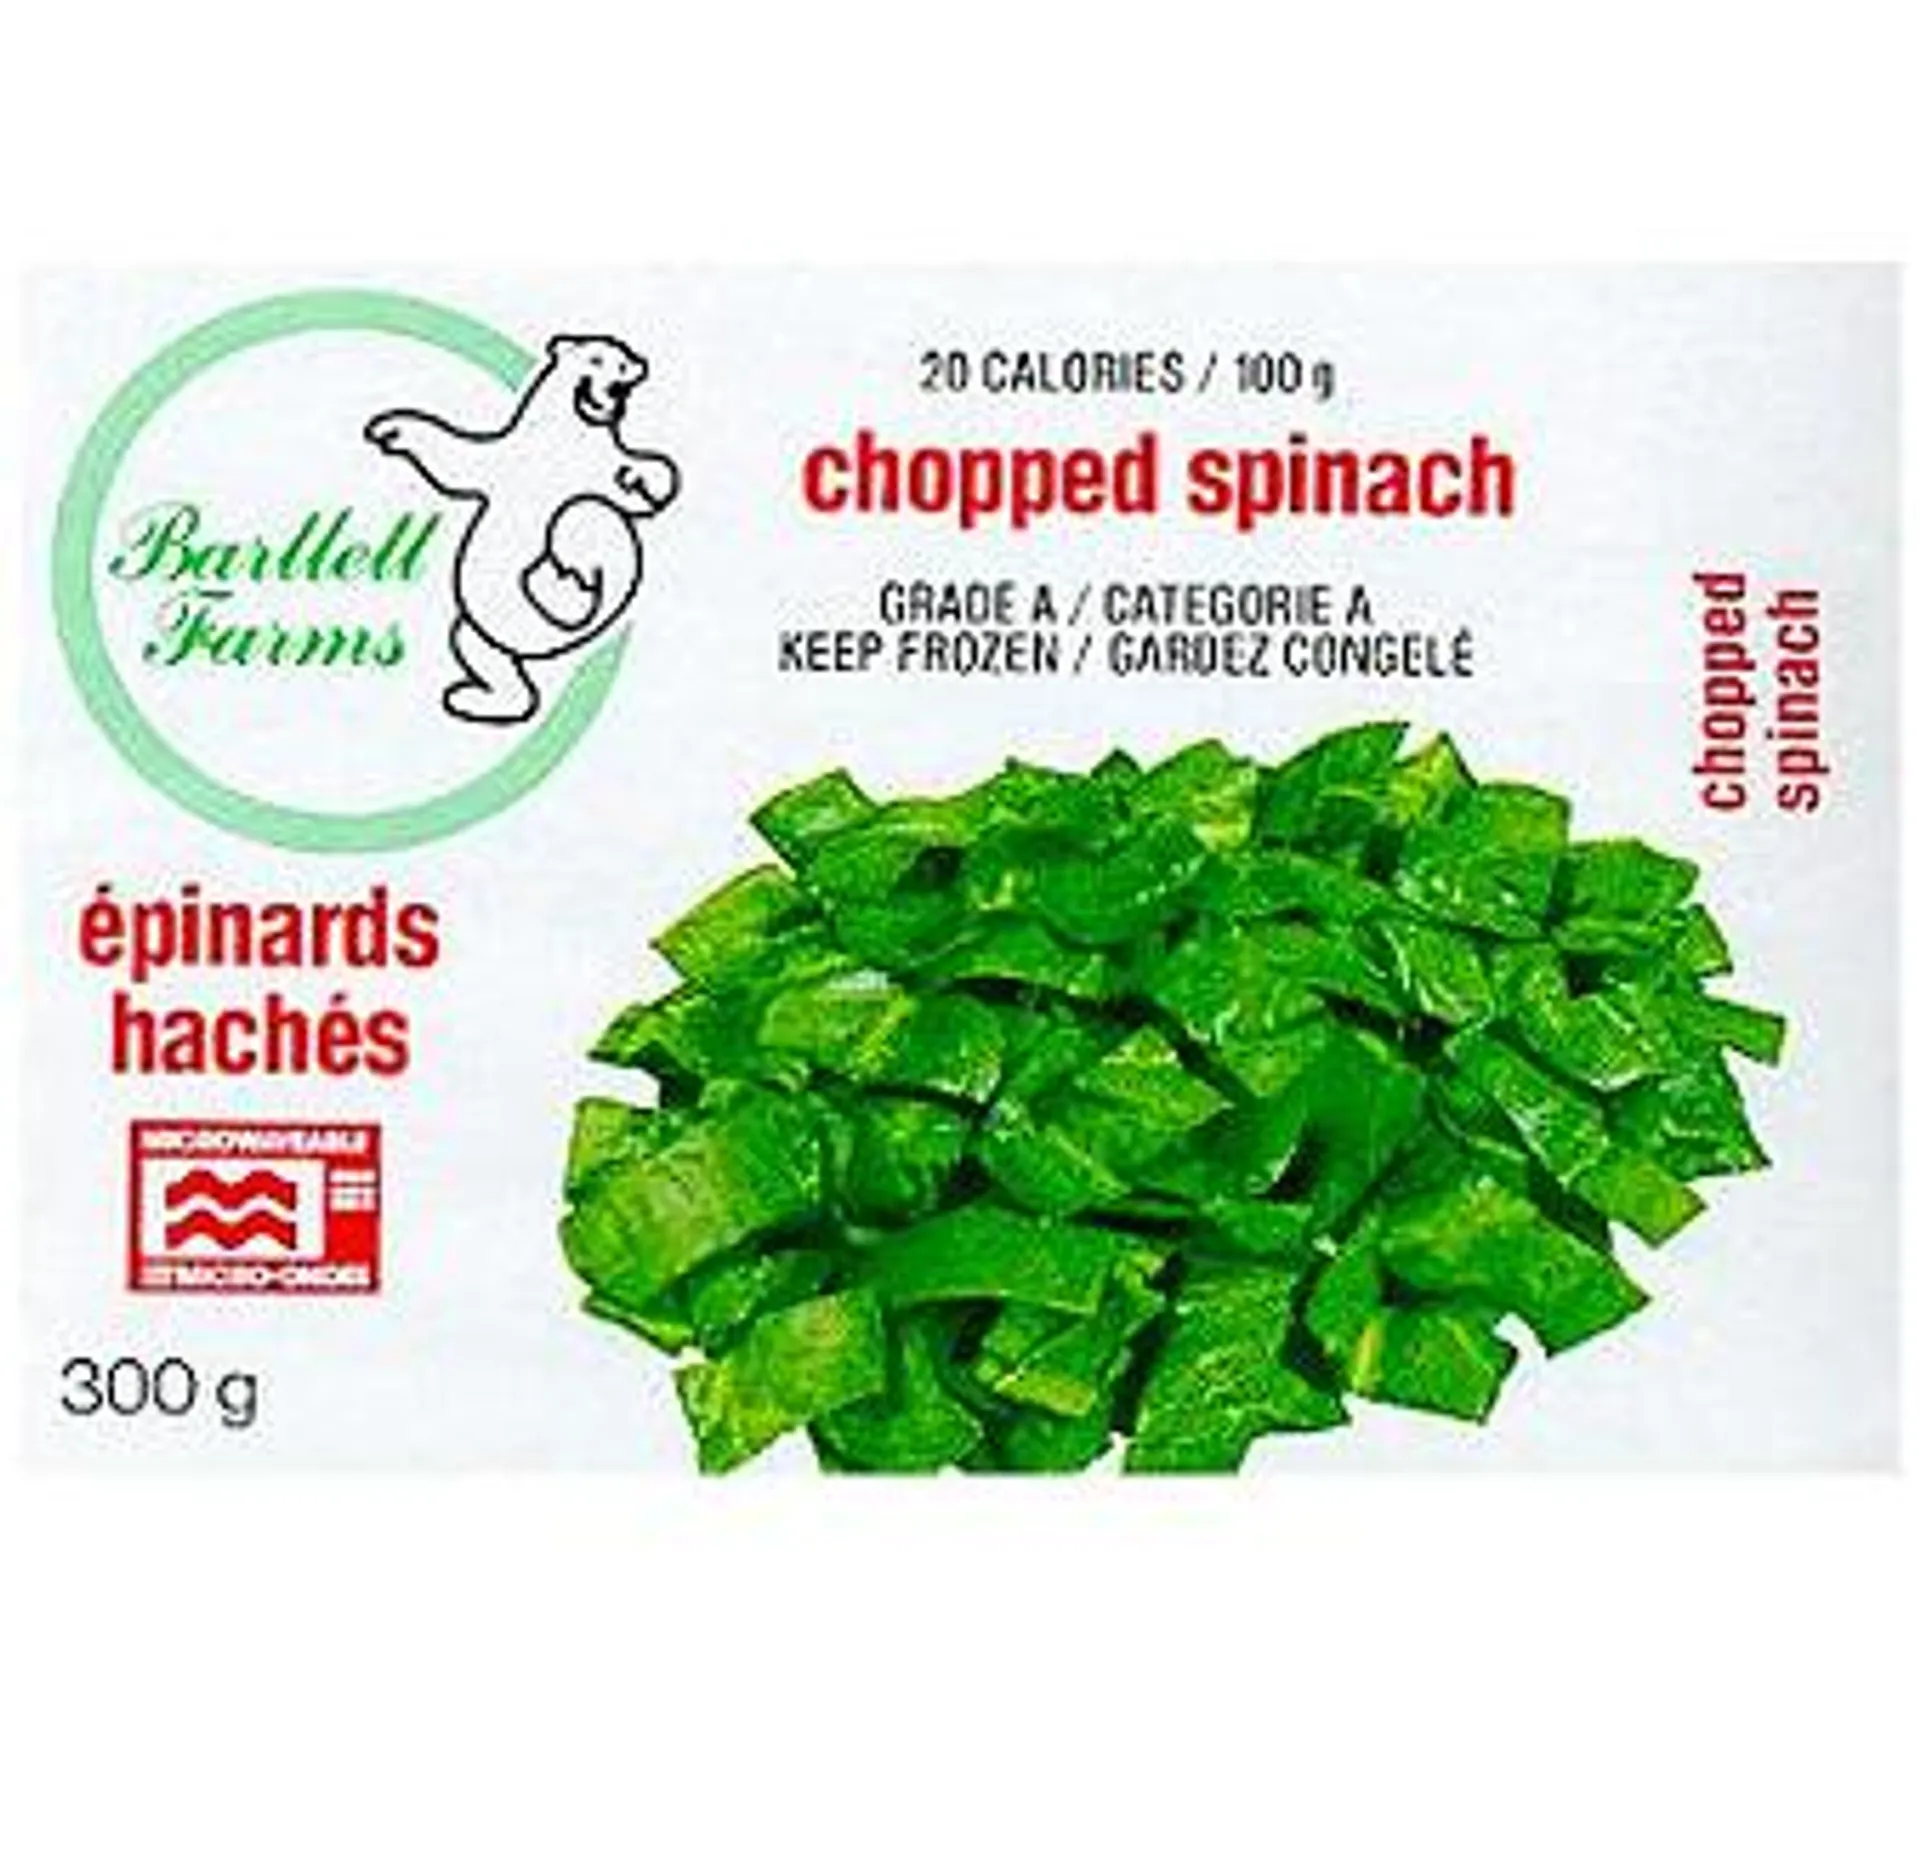 Bartlett Farm chopped spinach - 300g